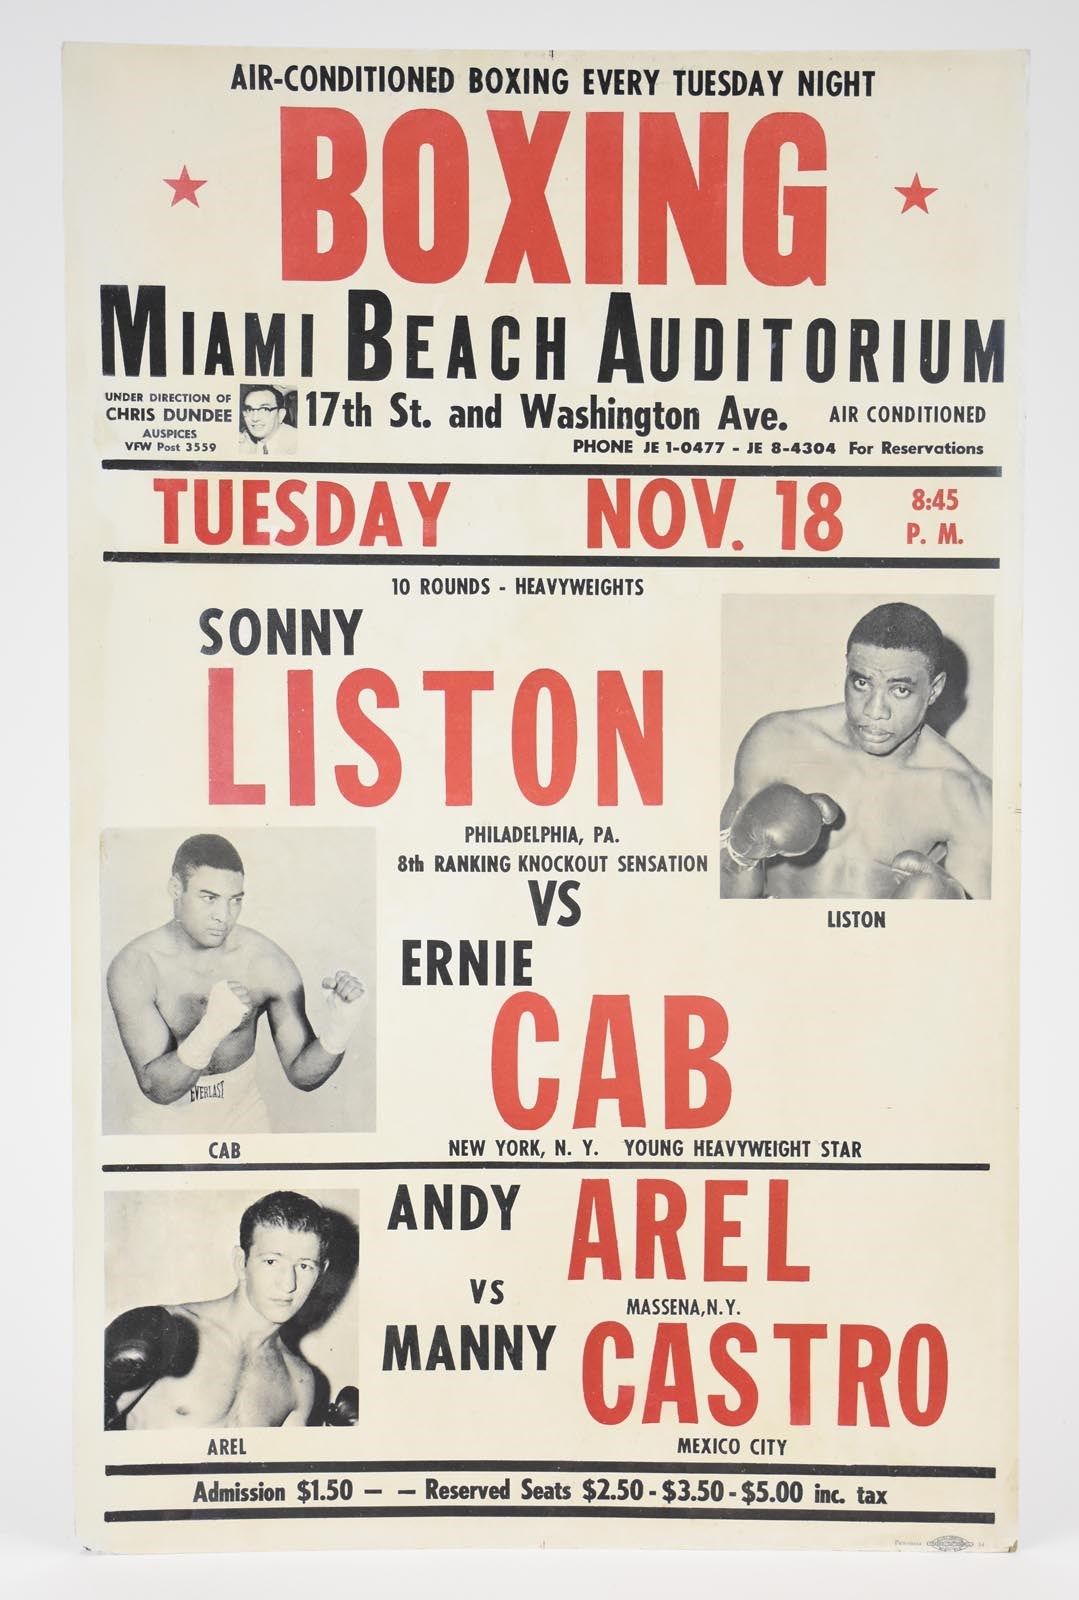 Muhammad Ali & Boxing - 1958 Sonny Liston vs. Ernie Cab Boxing Site Poster